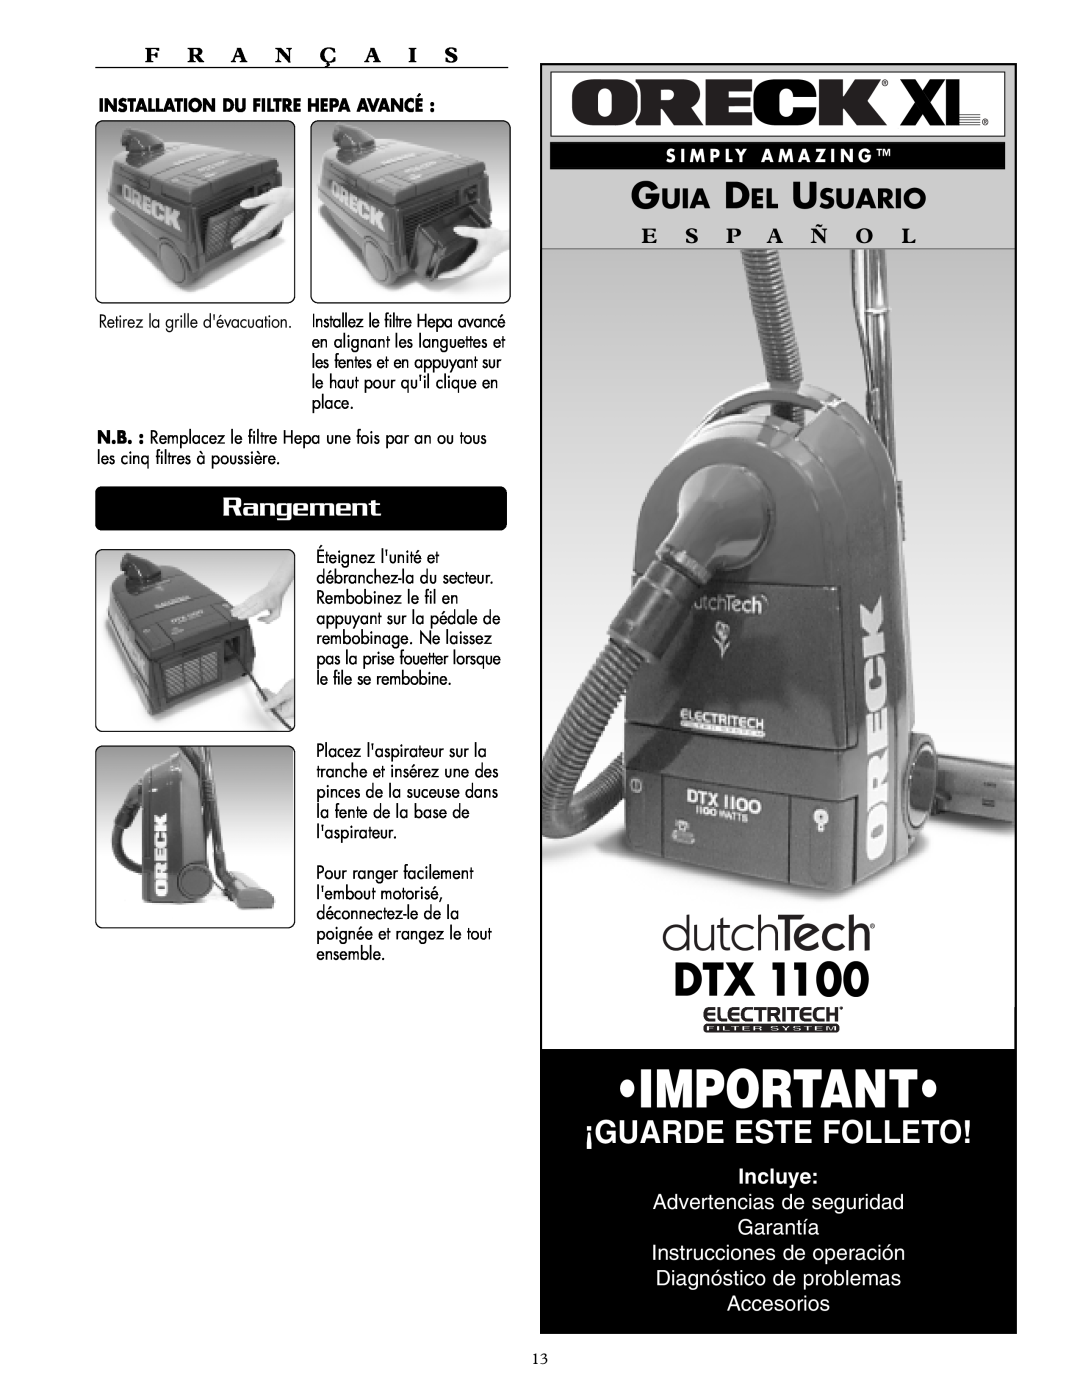 Oreck DTX 1100 ¡Guarde Este Folleto, Rangement, Guia Del Usuario, E S P A Ñ O L, Incluye, Instrucciones de operación 